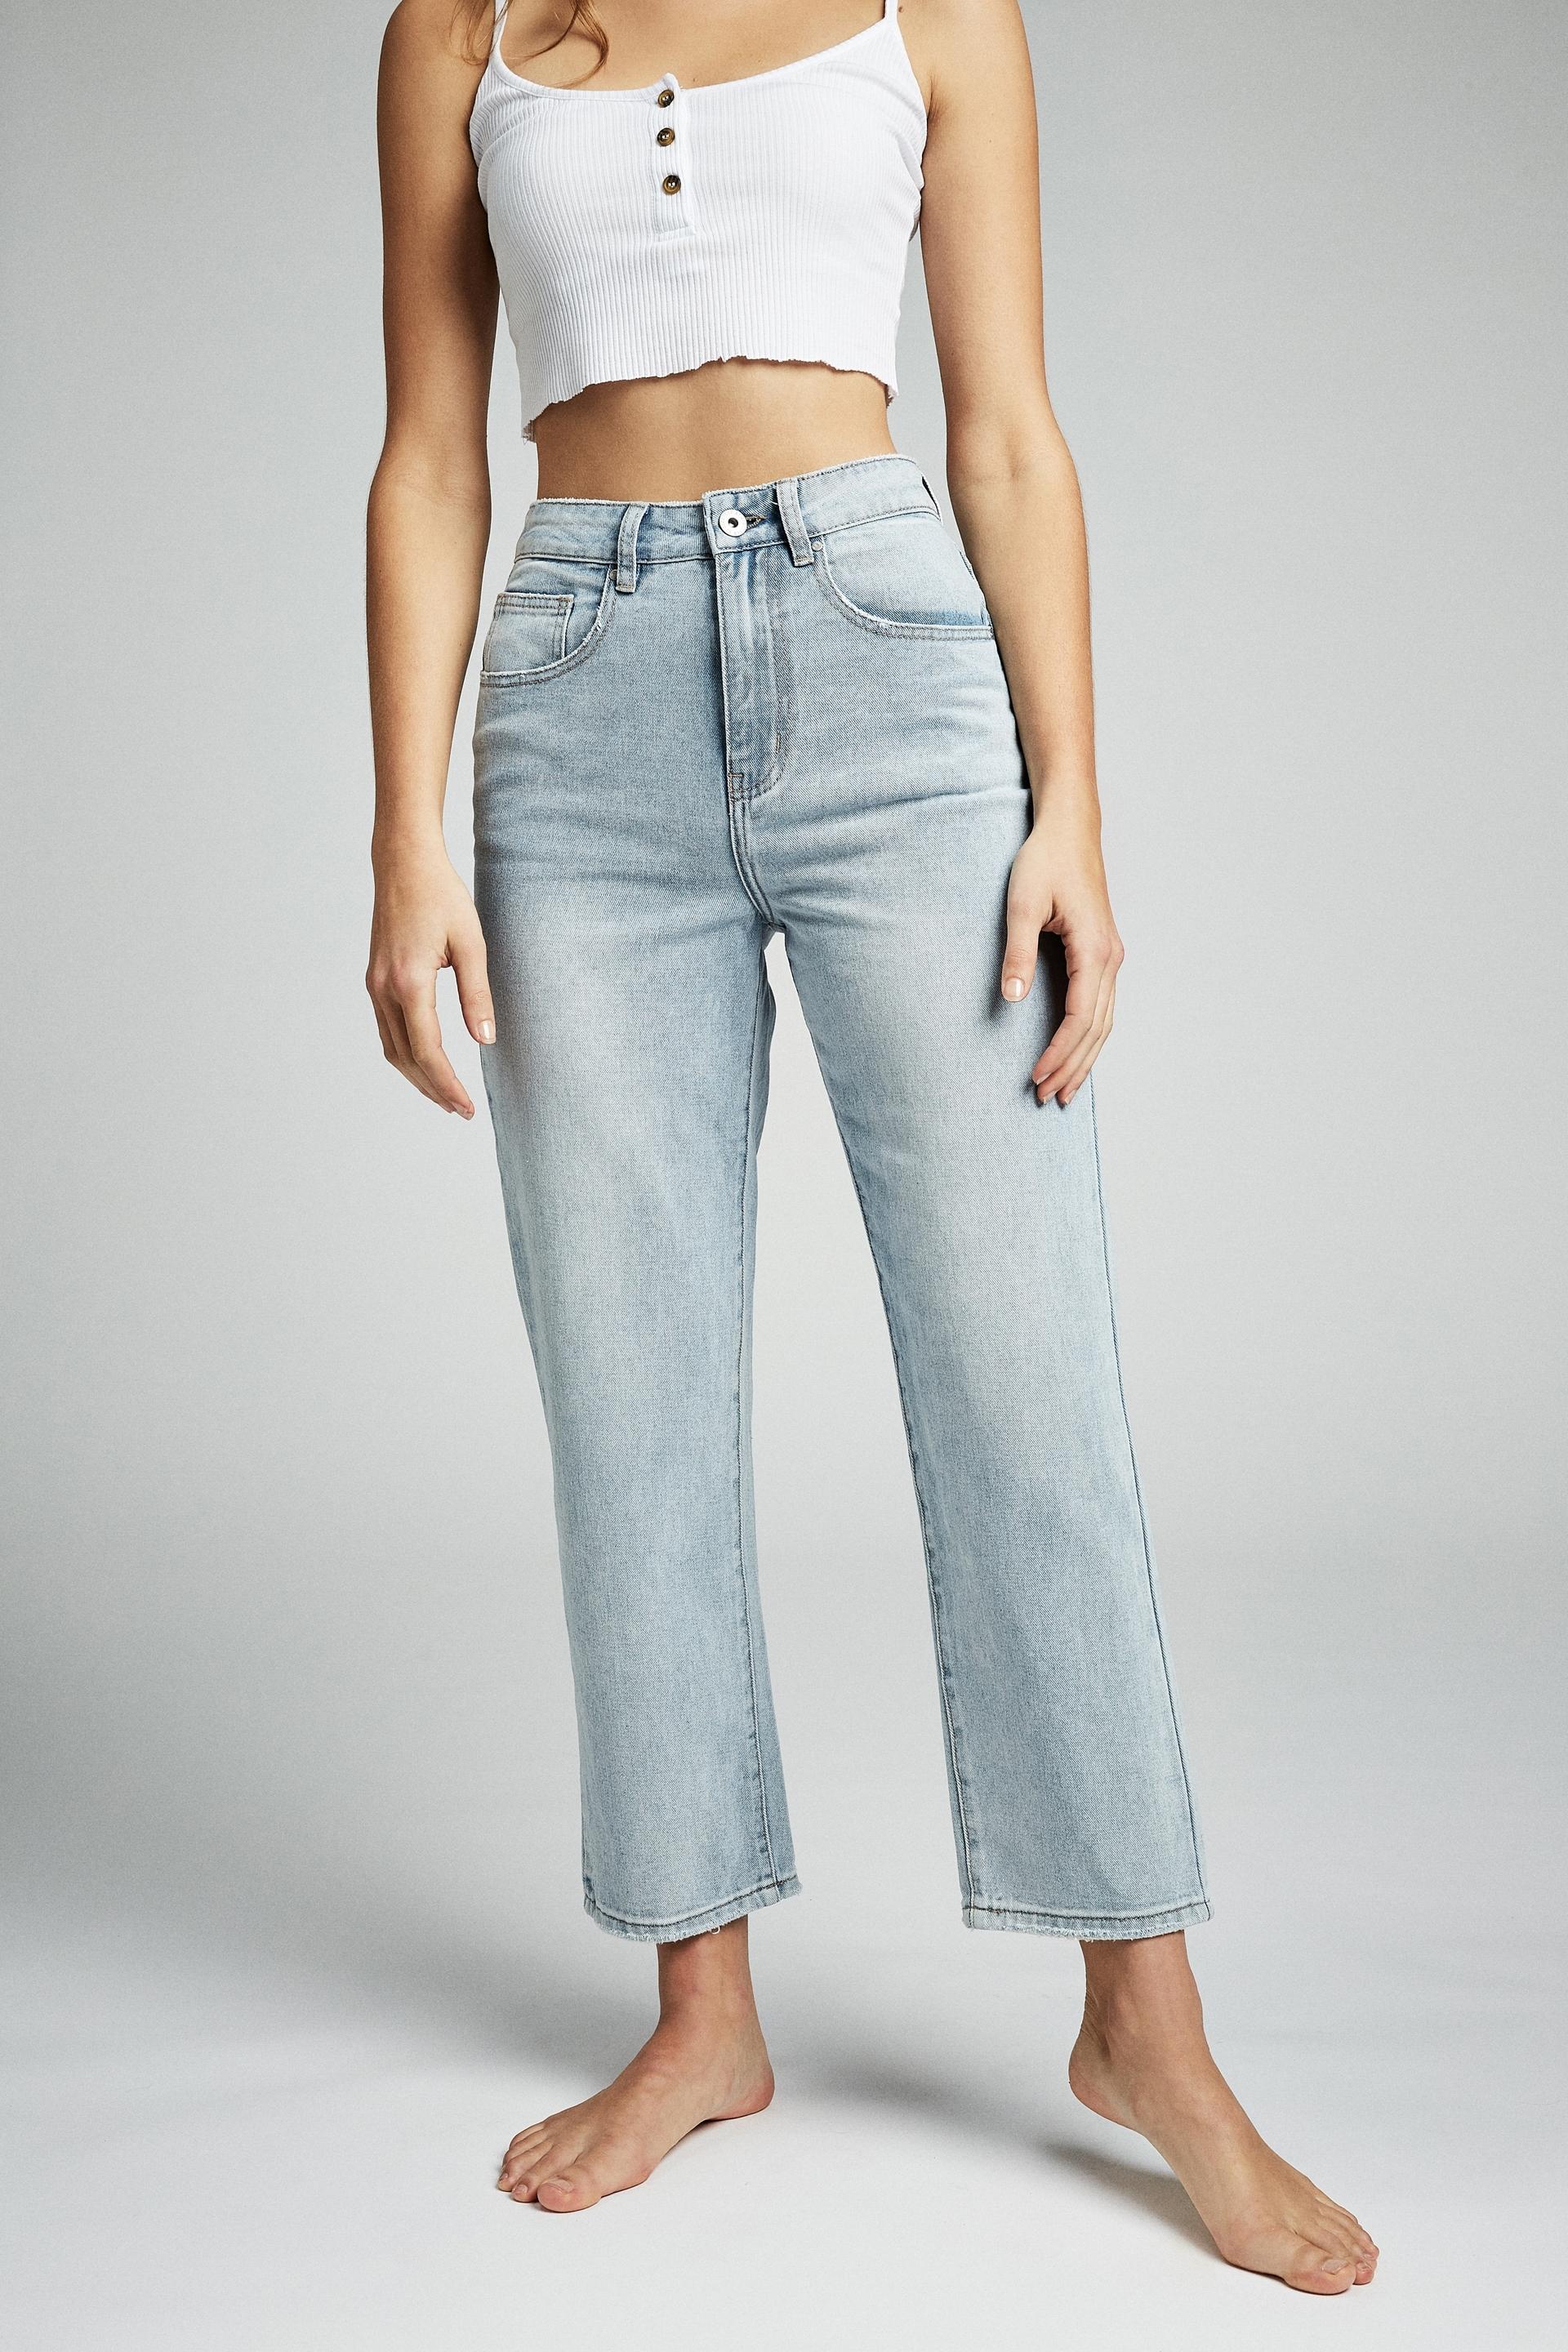 Straight leg jean - brooklyn blue Cotton On Jeans | Superbalist.com